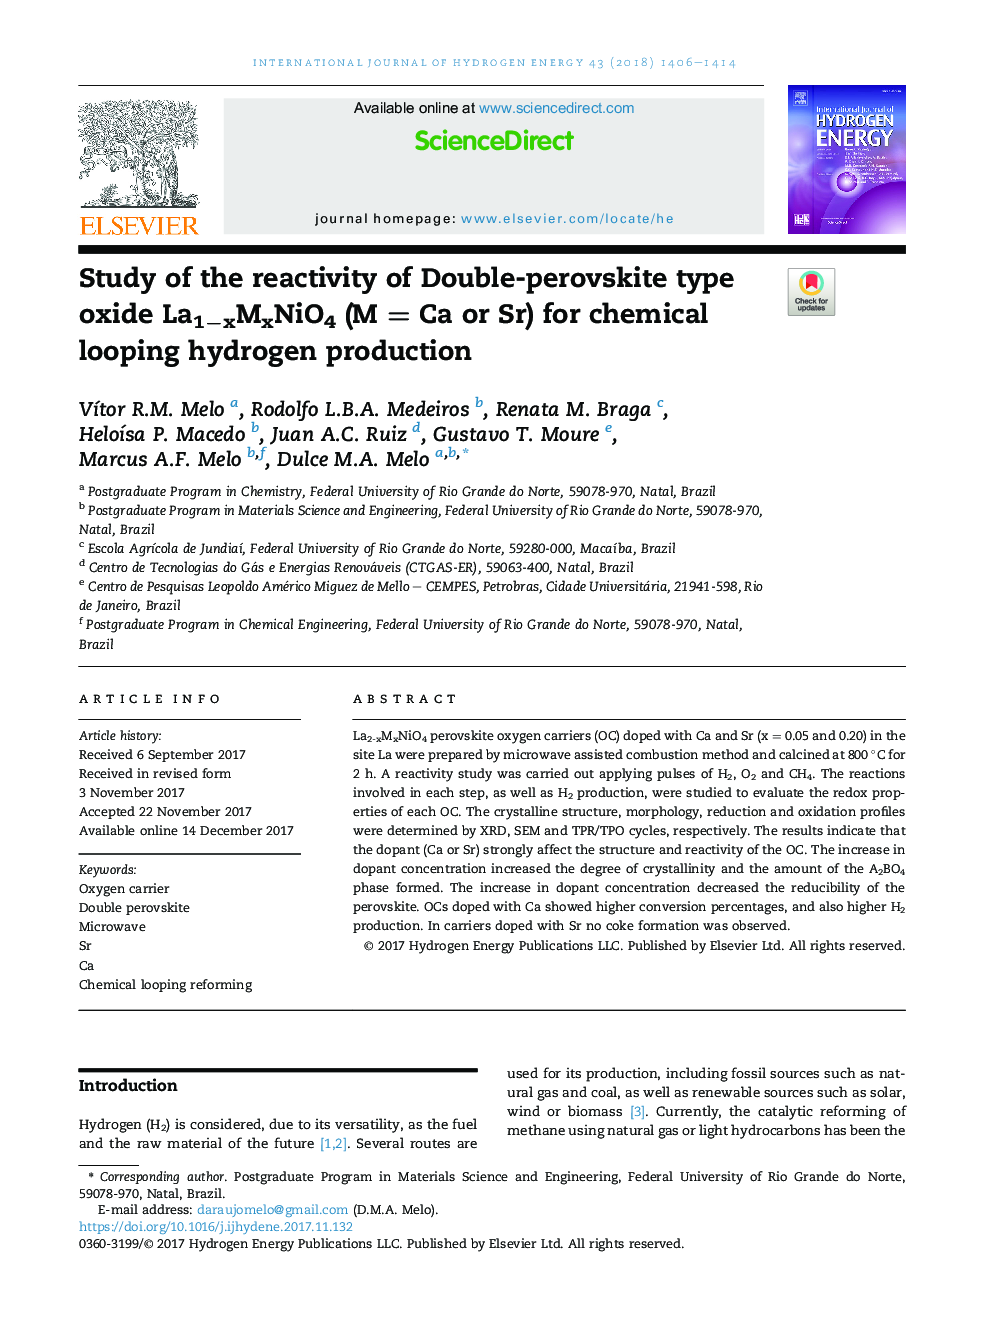 Study of the reactivity of Double-perovskite type oxide La1âxMxNiO4 (MÂ =Â Ca or Sr) for chemical looping hydrogen production